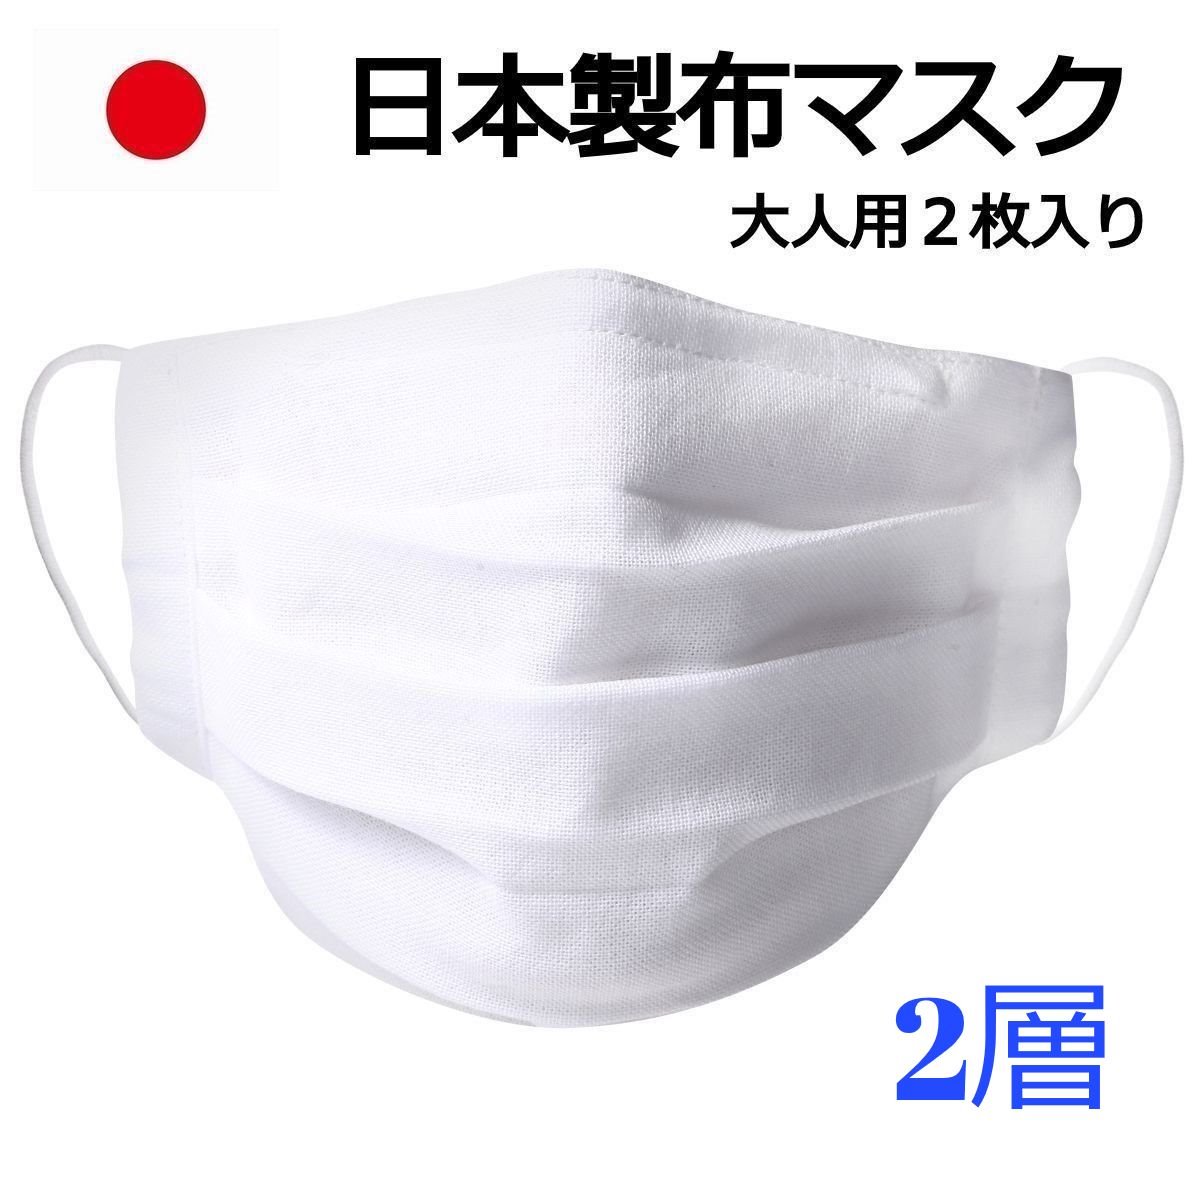 布マスク 日本製 国産 抗菌消臭仕様